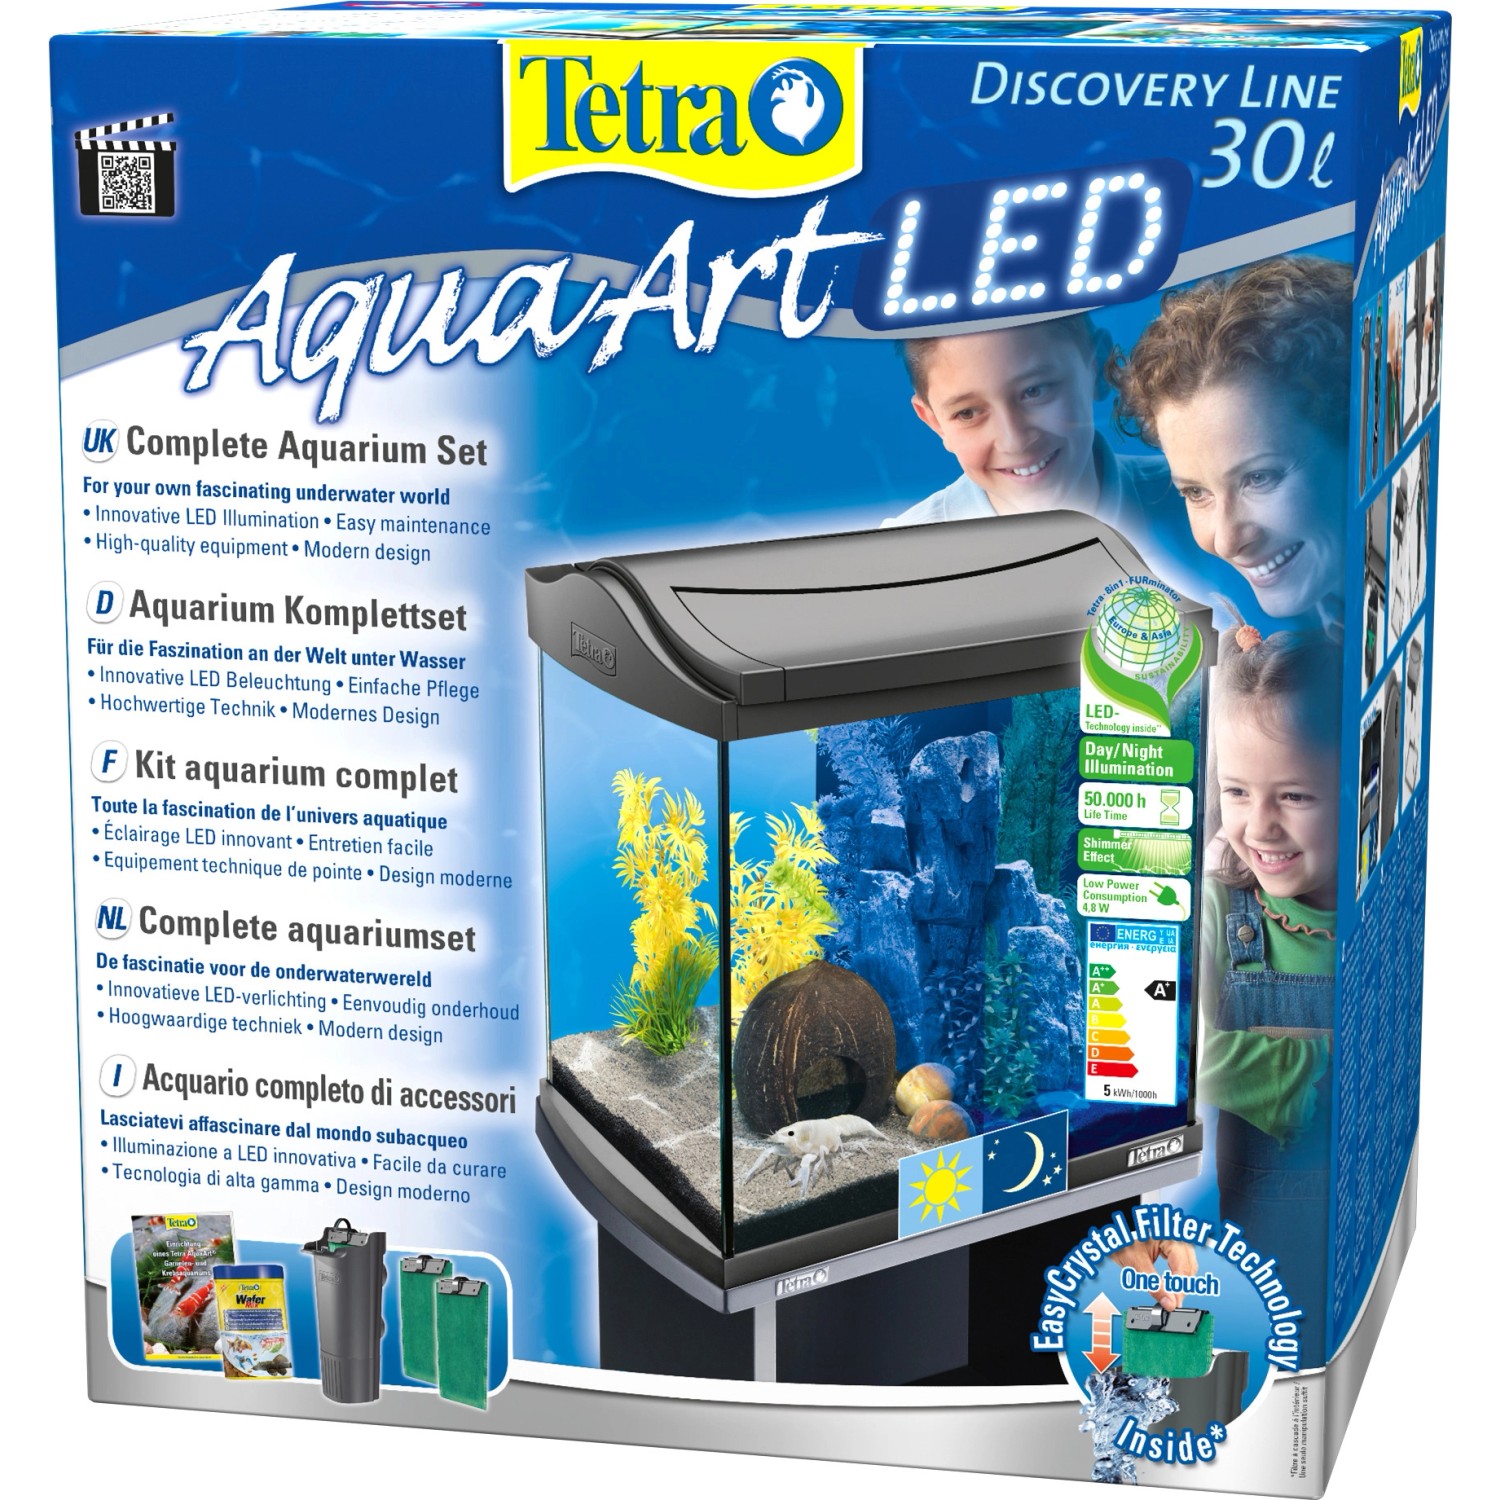 Tetra Aquarium-Set LED l AquaArt Anthrazit Line 30 bei OBI kaufen Discovery